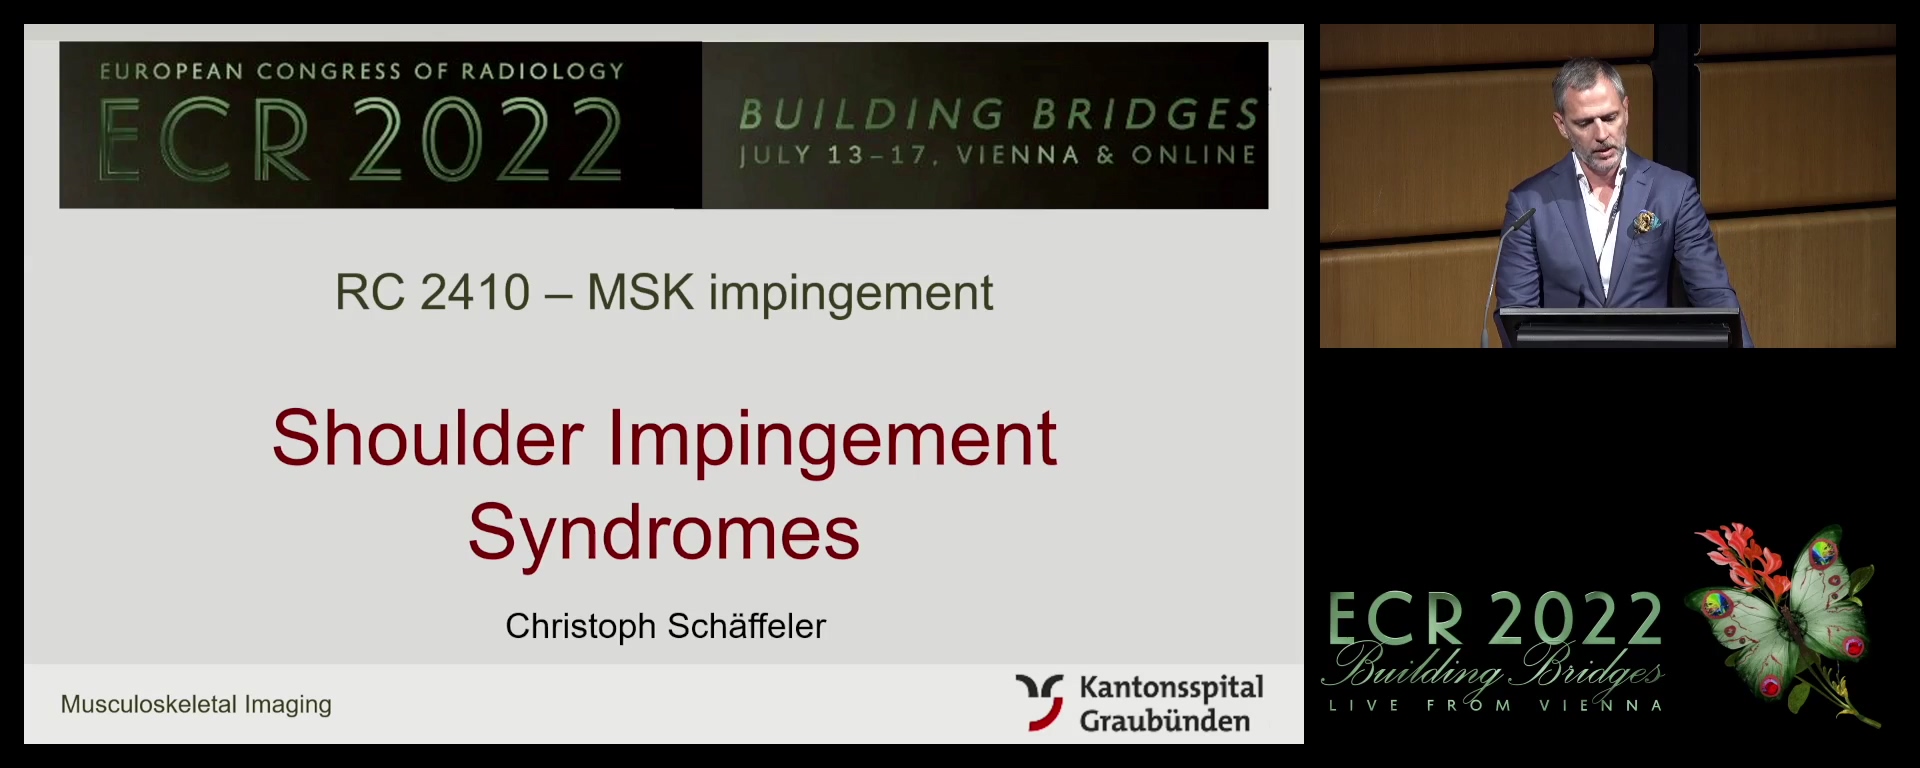 Shoulder impingement syndromes - Christoph Schaeffeler, Chur / CH